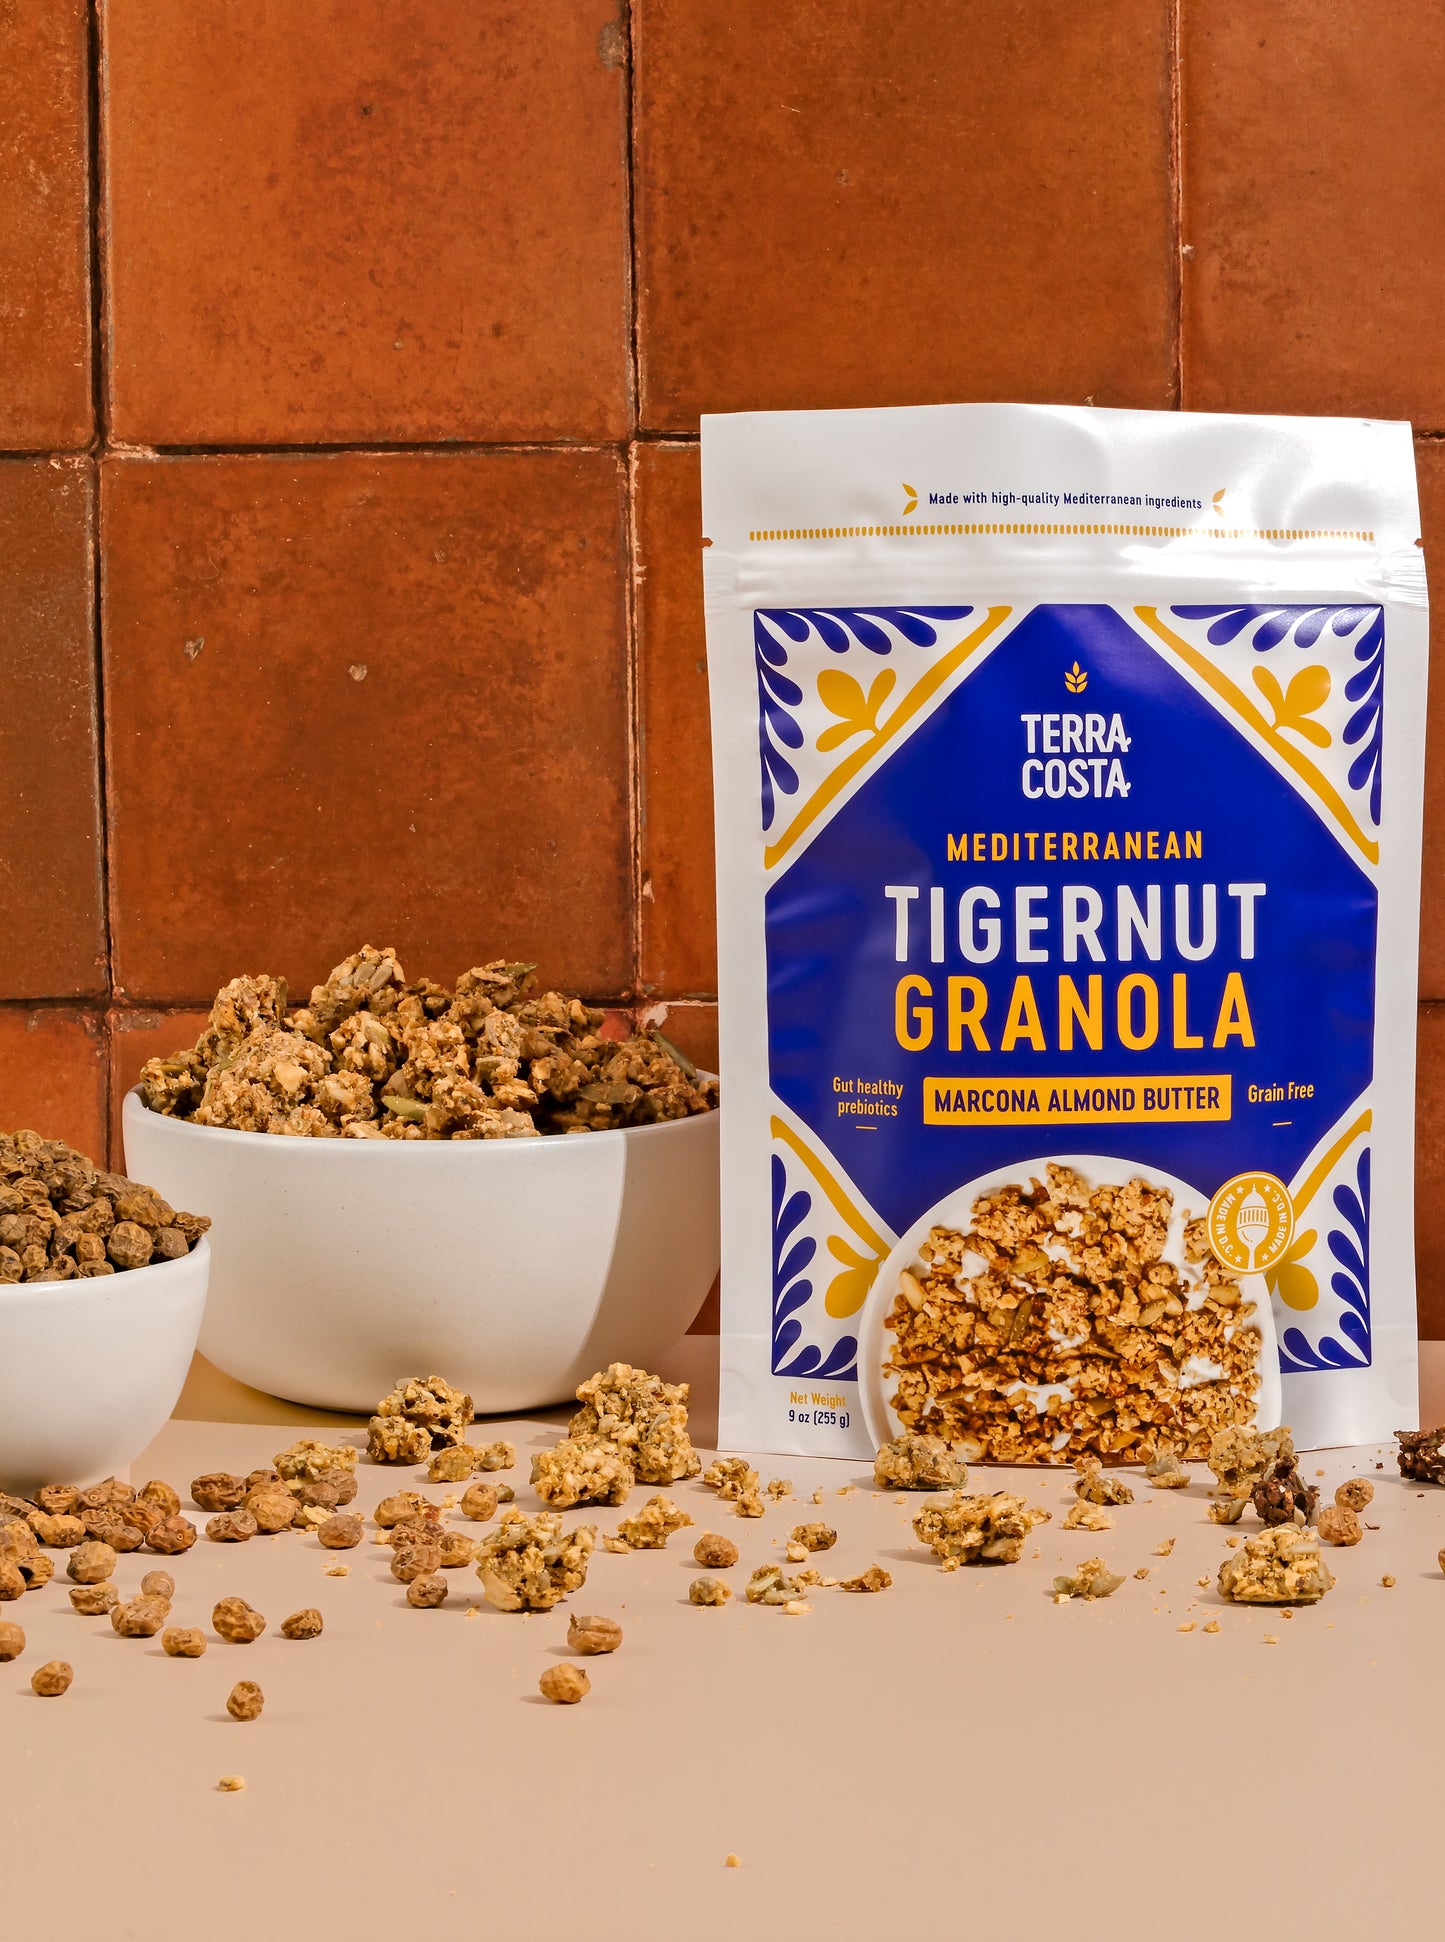 Mediterranean Grain-Free Tigernut Granola with Marcona Almond Butter